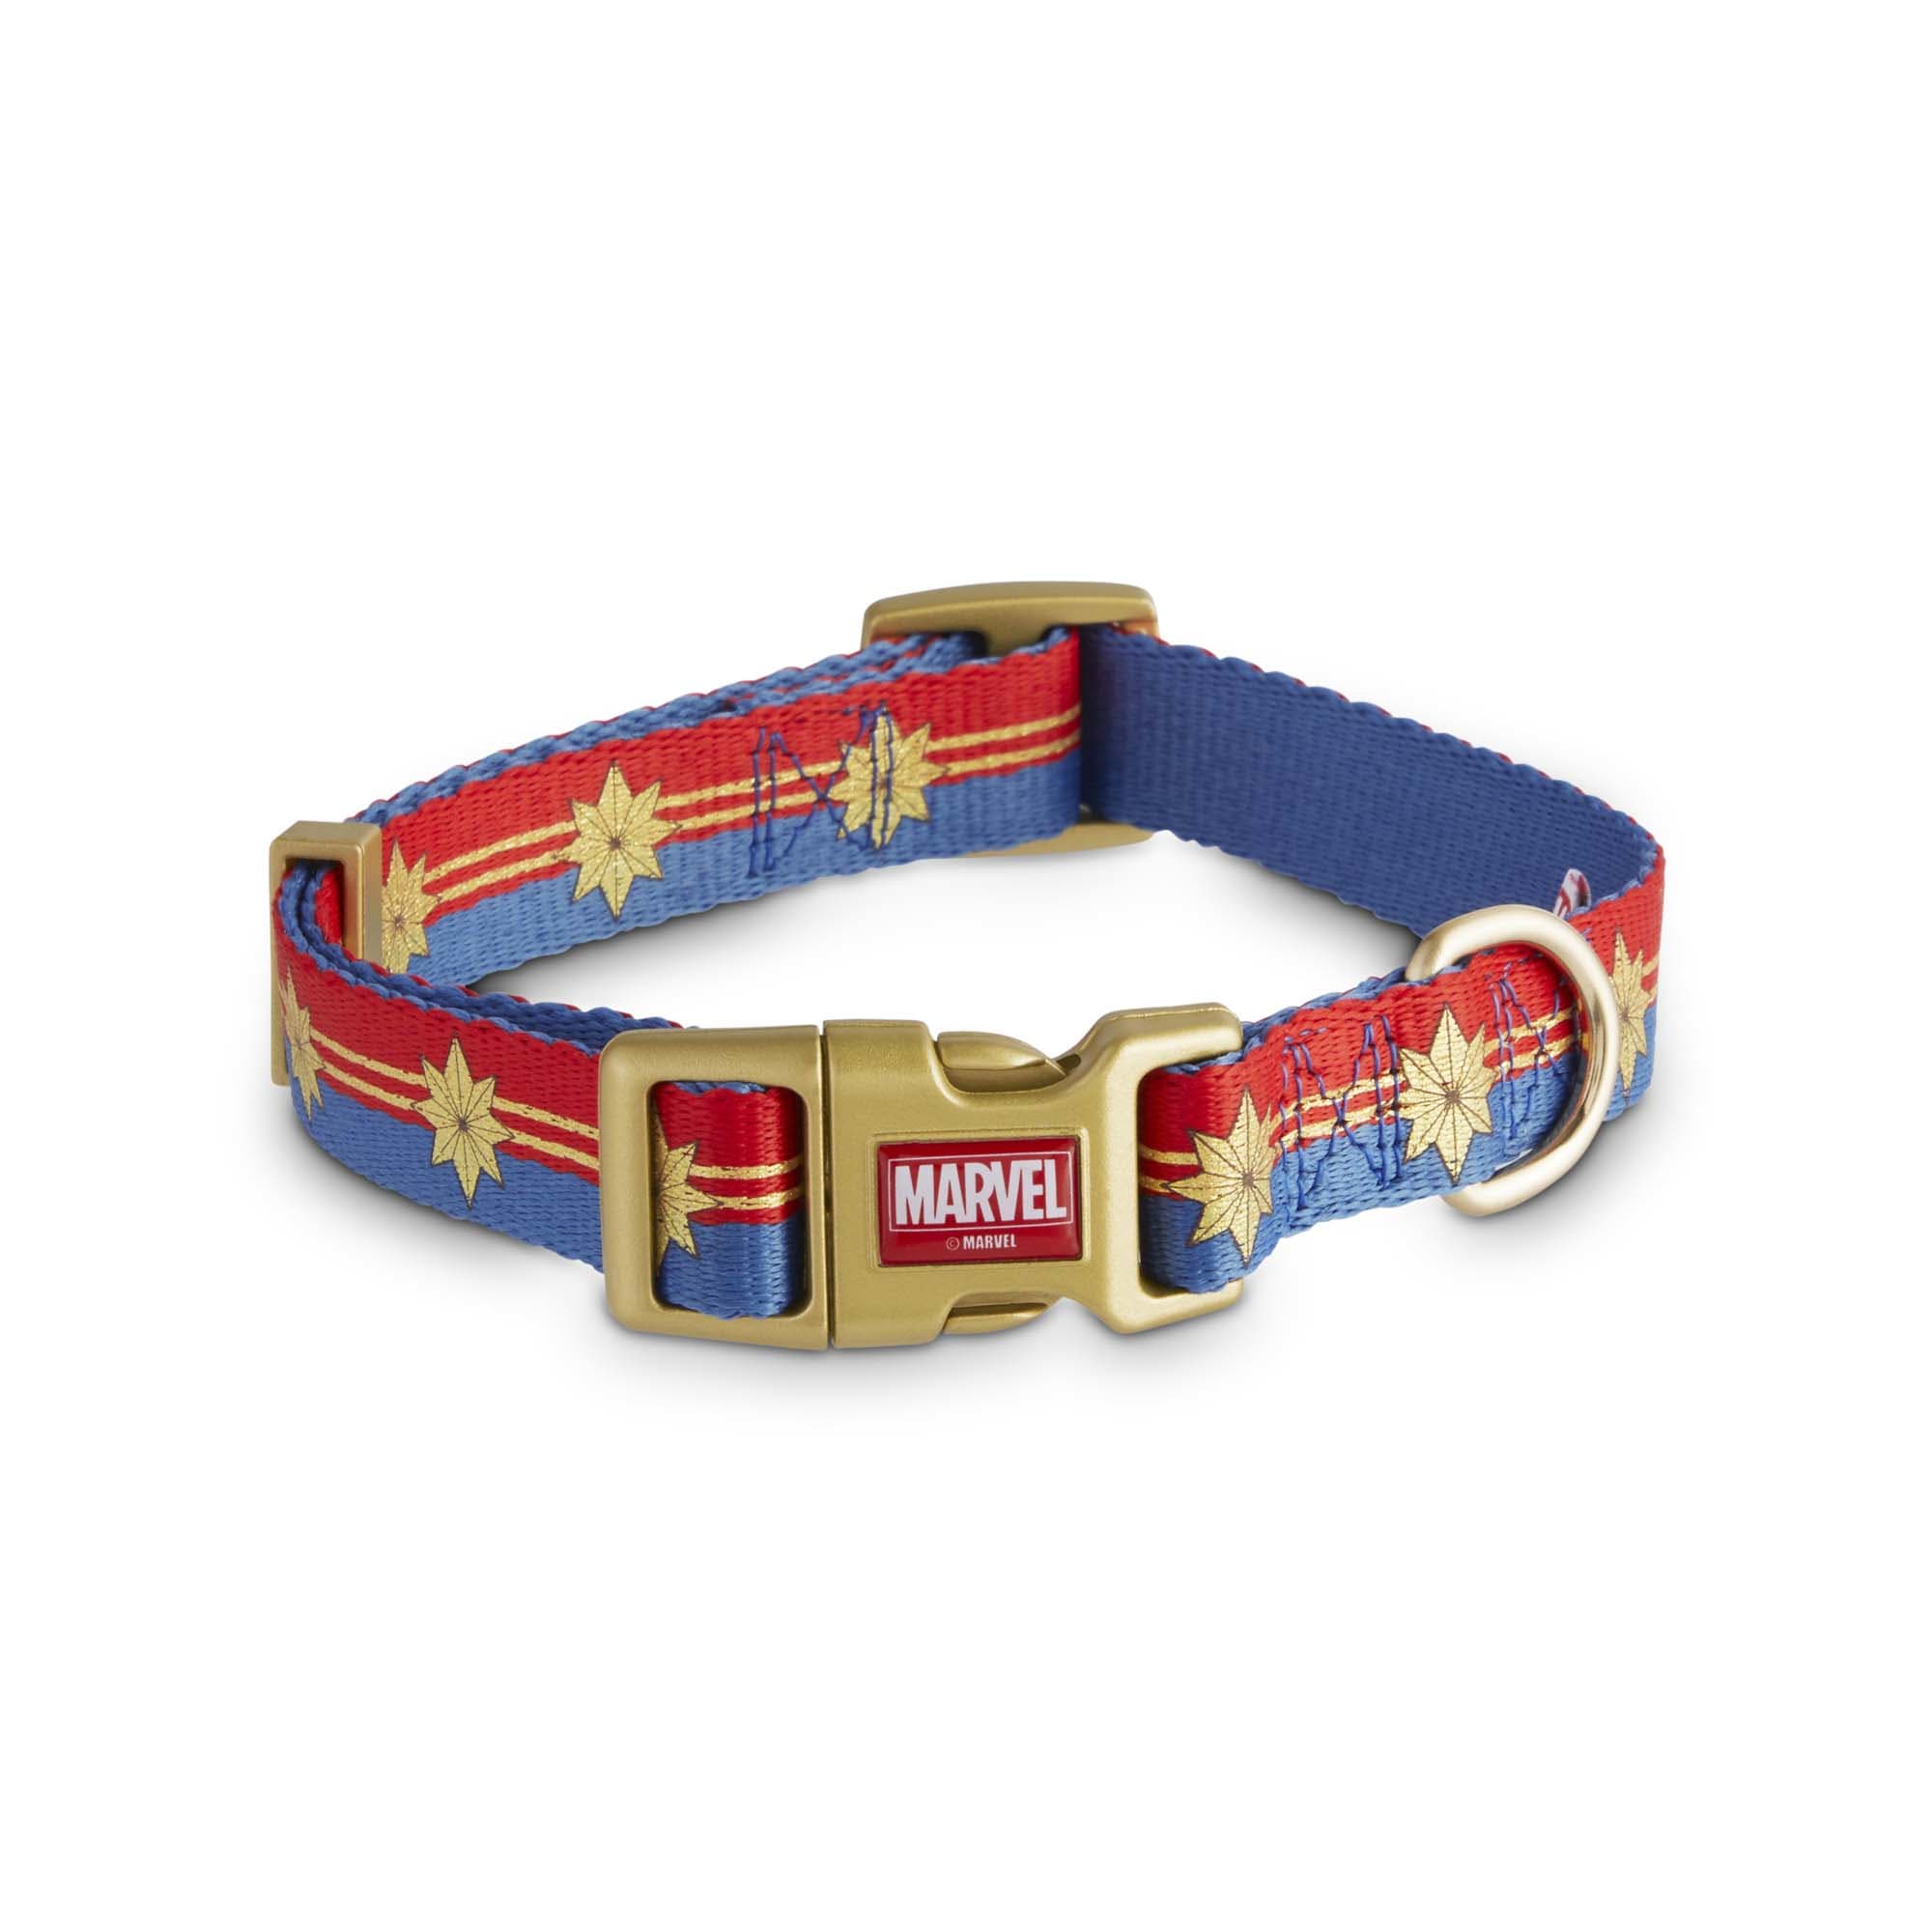 Marvel Captain Marvel Dog Collar, Medium Petco